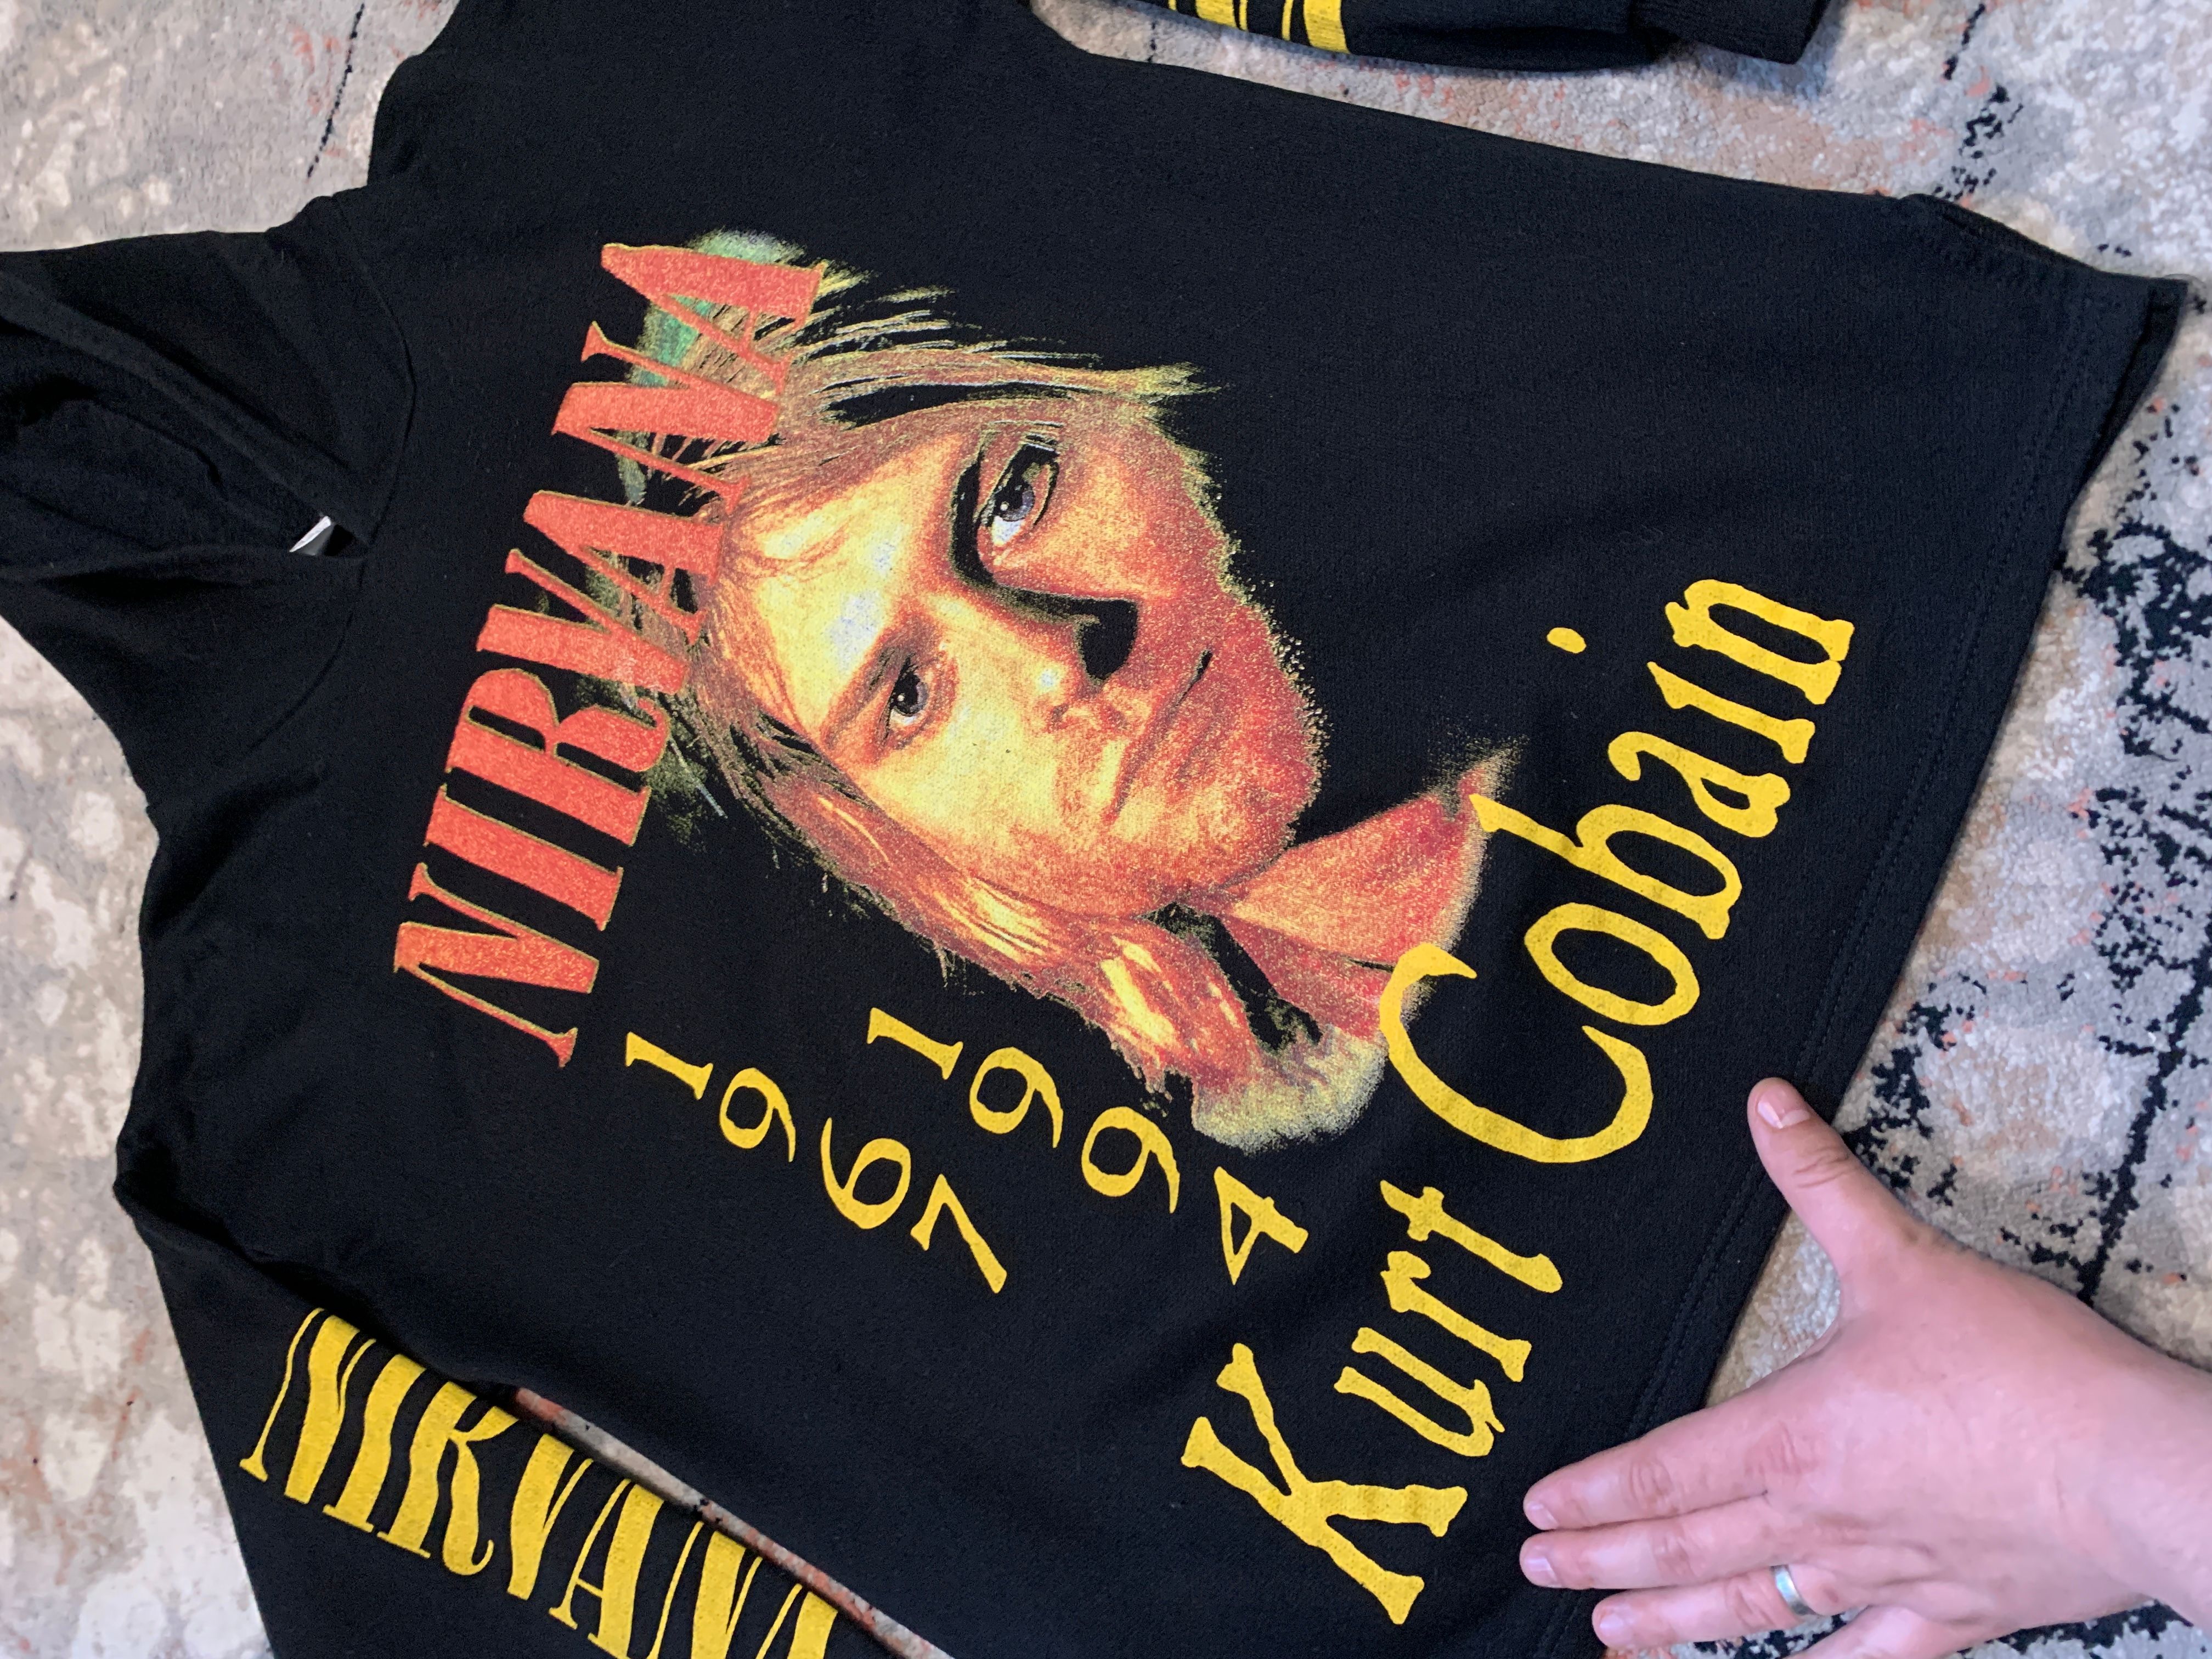 Vintage Nirvana Kurt Cobain 1967-1994 Vintage Bootleg Hoodie Size US S / EU 44-46 / 1 - 5 Thumbnail